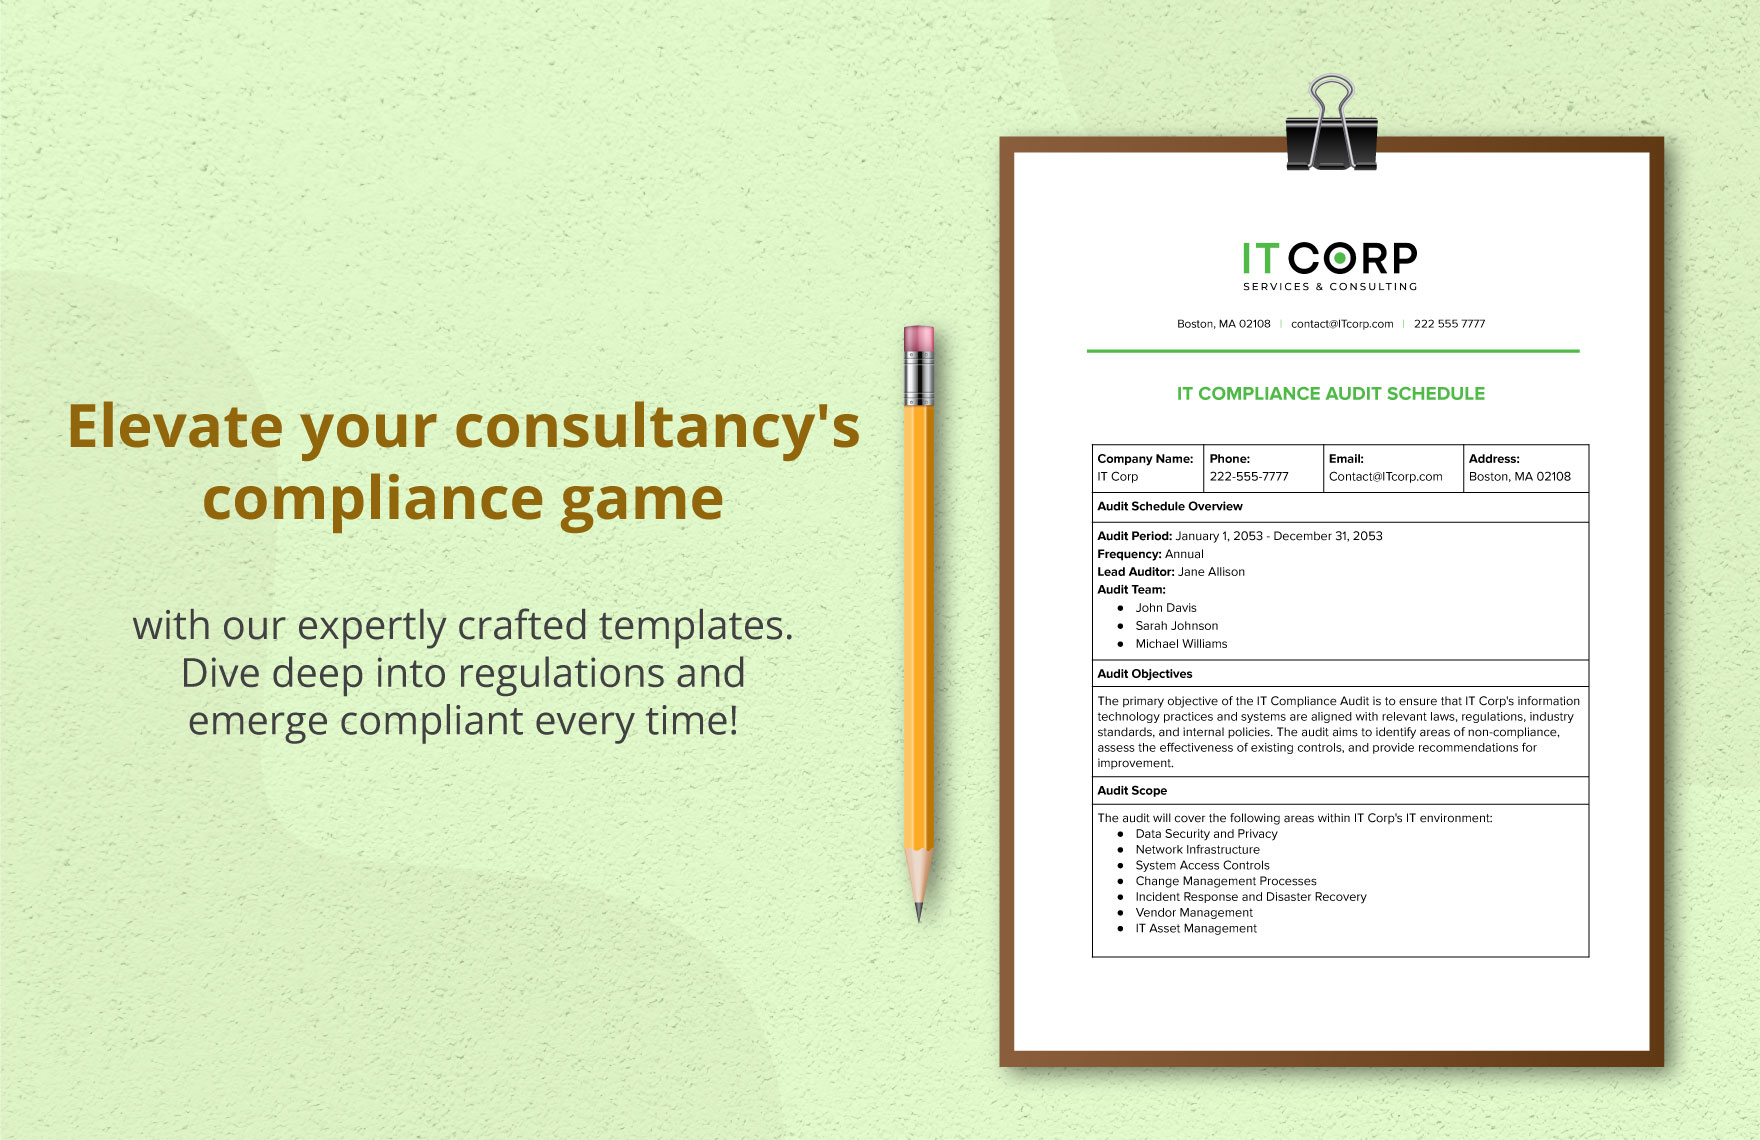 IT Compliance Audit Schedule Template